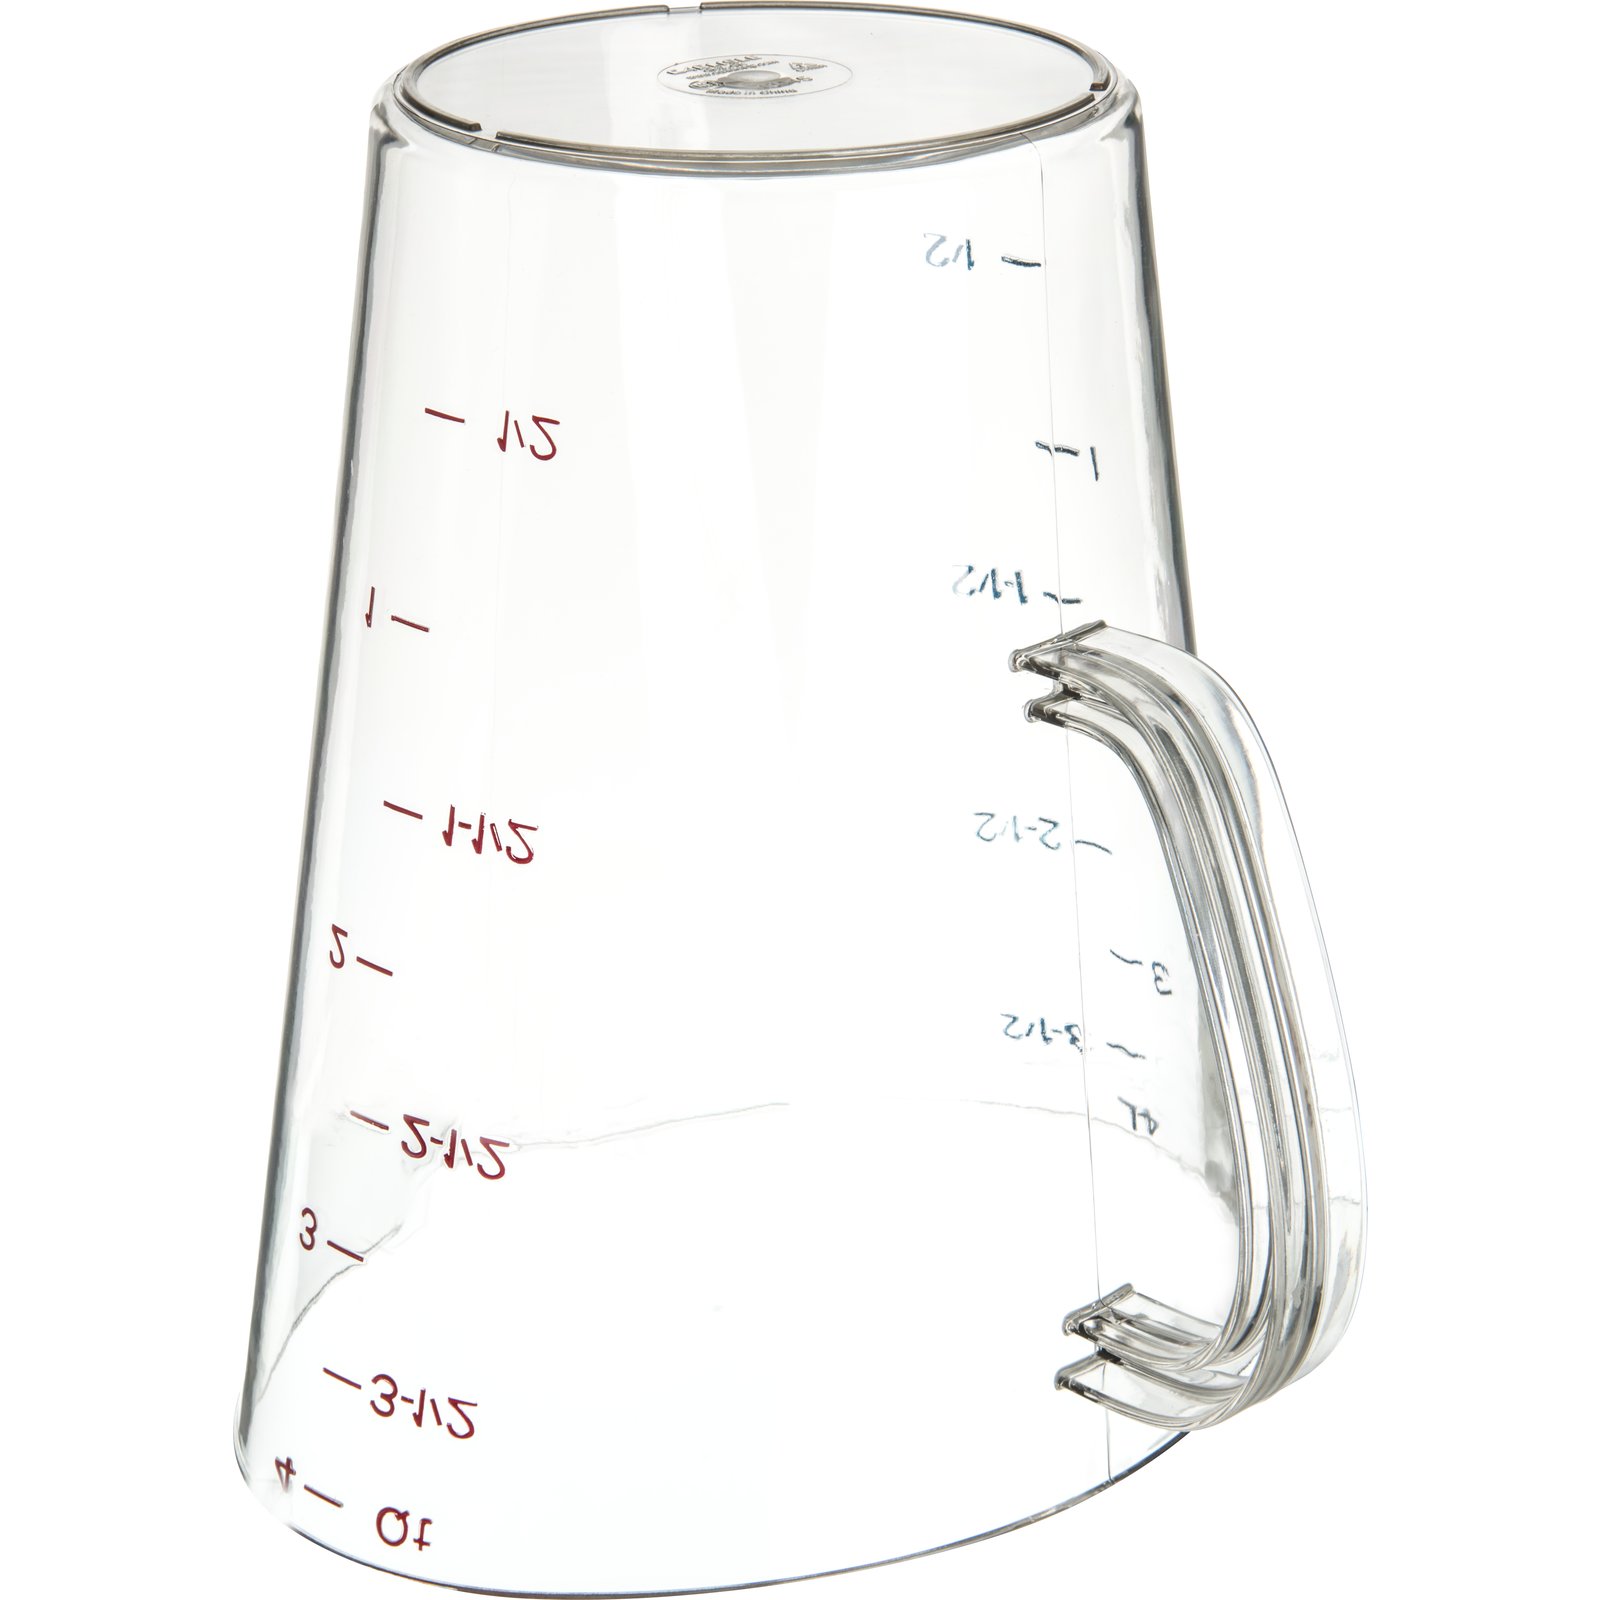 Commercial Measuring Cups - 1 Quart S-24377 - Uline